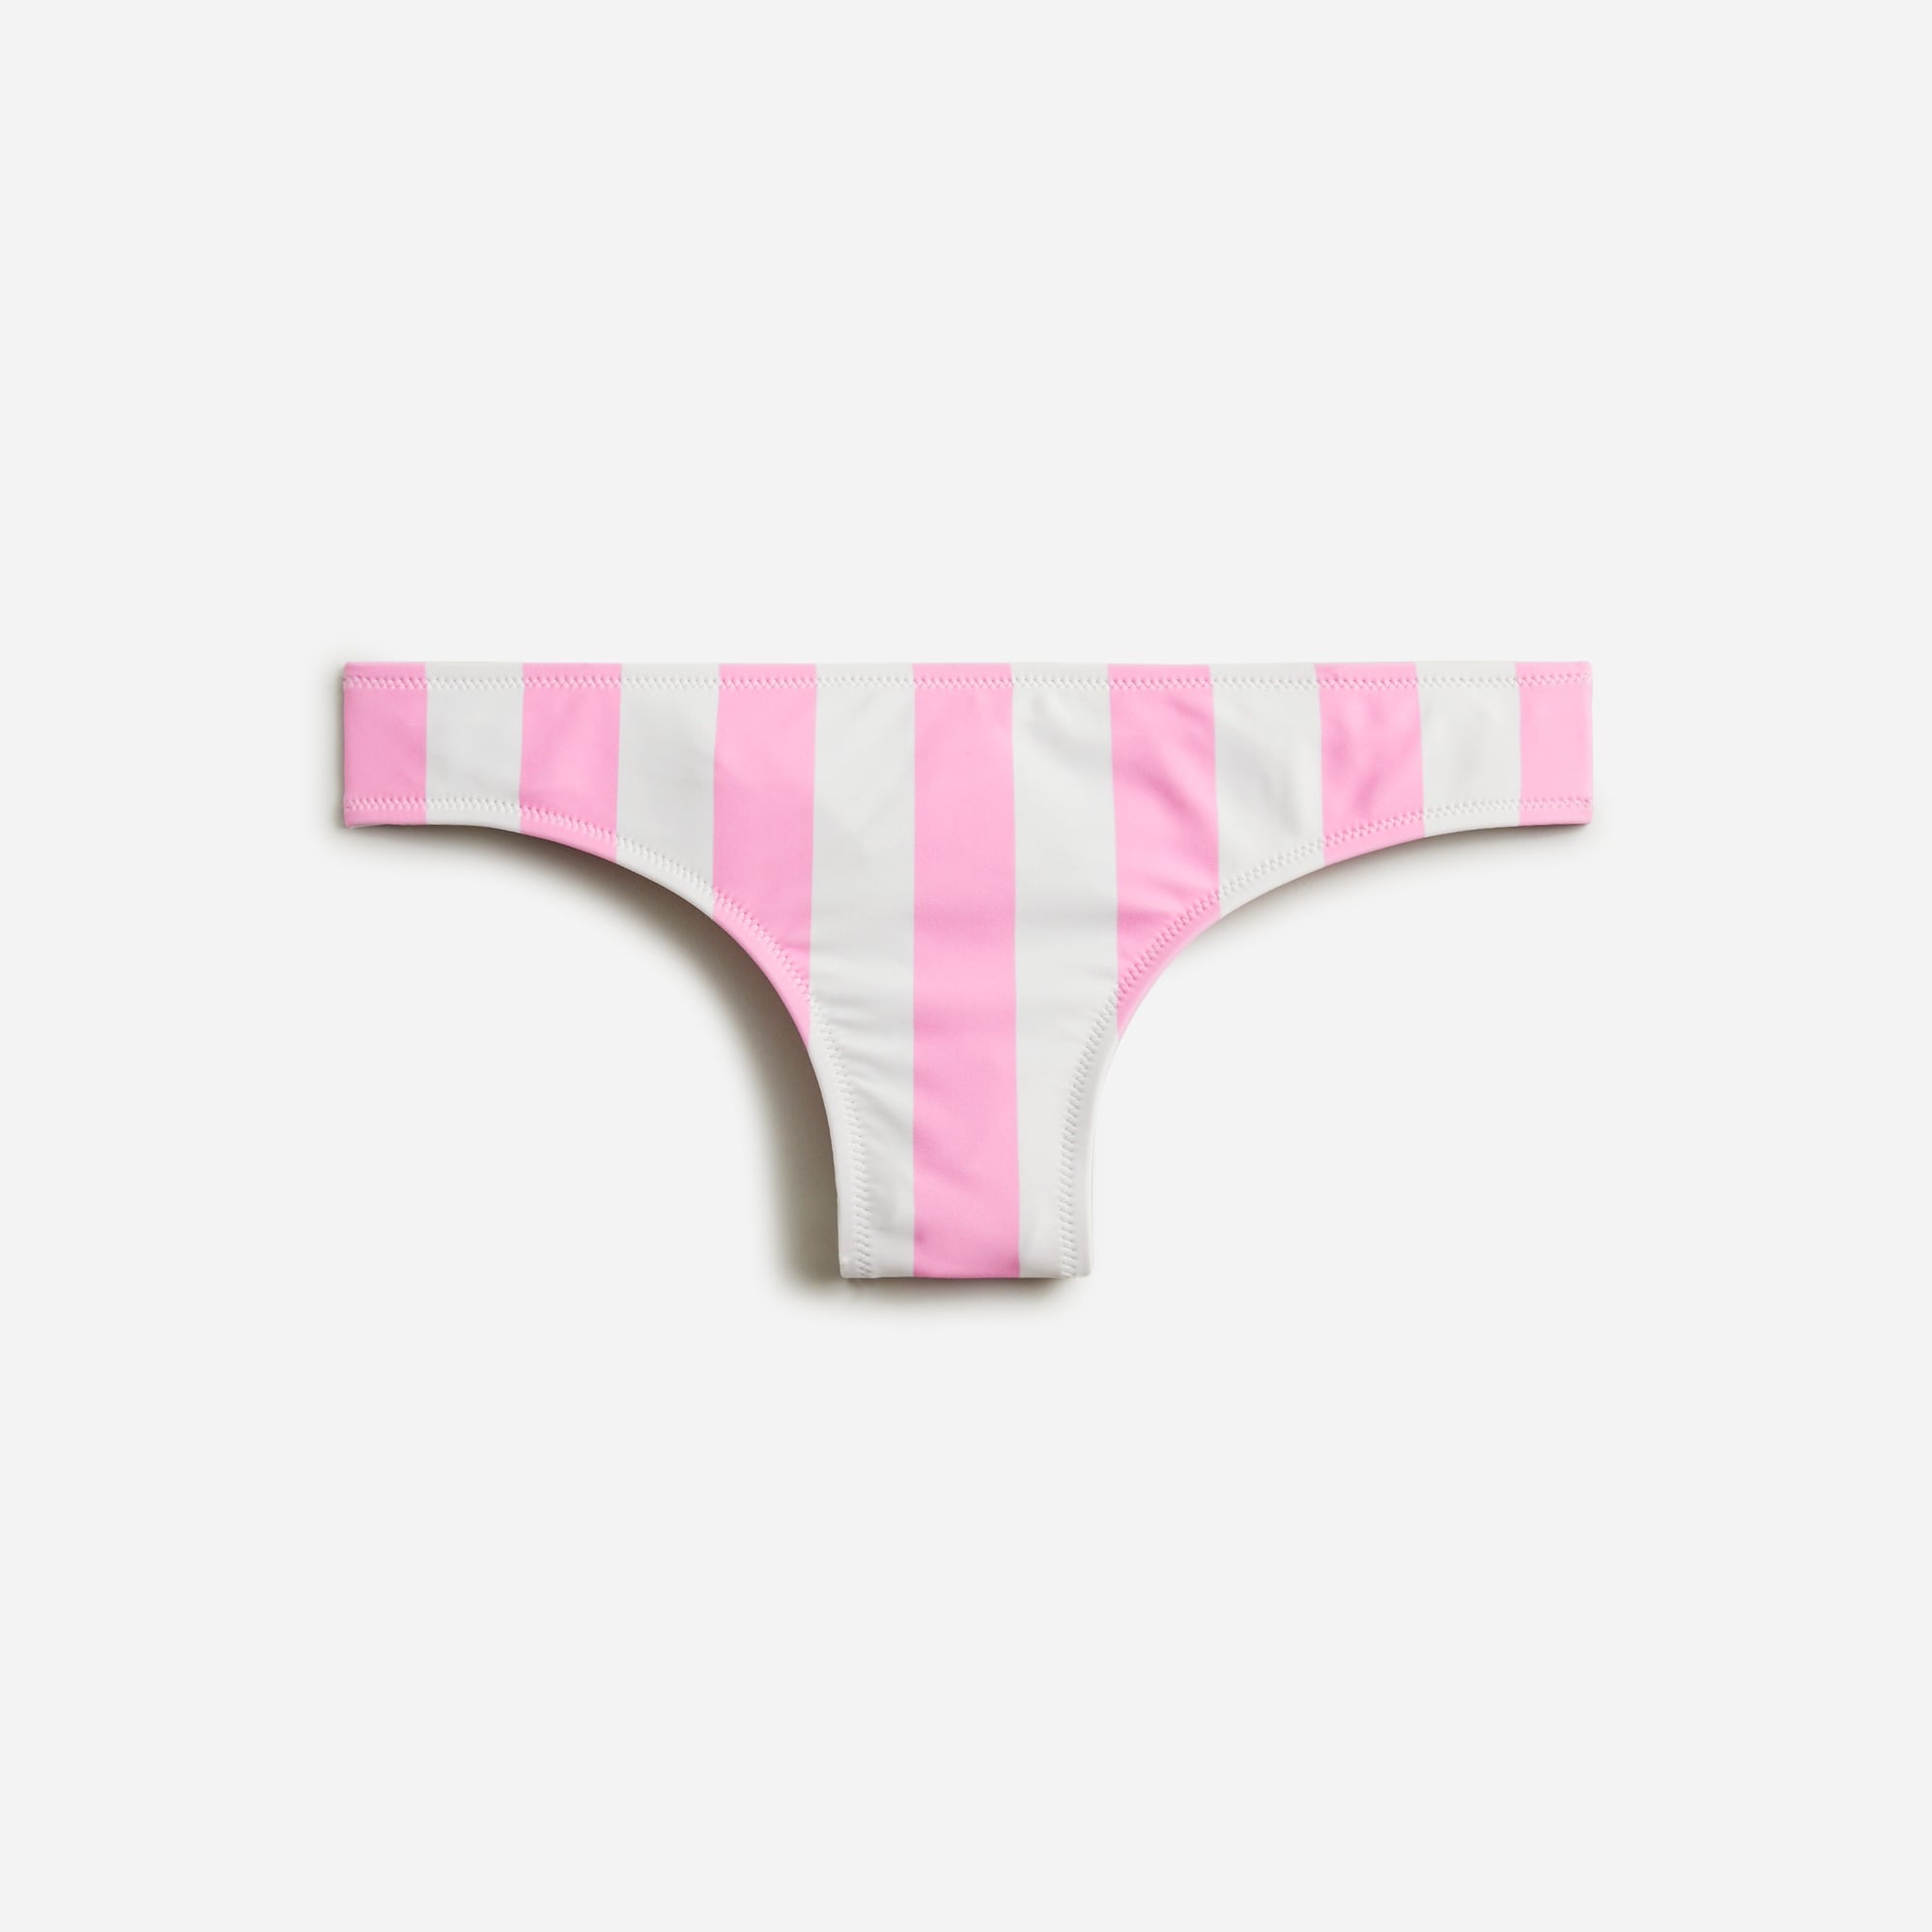  Surf hipster bikini bottom in pink stripe